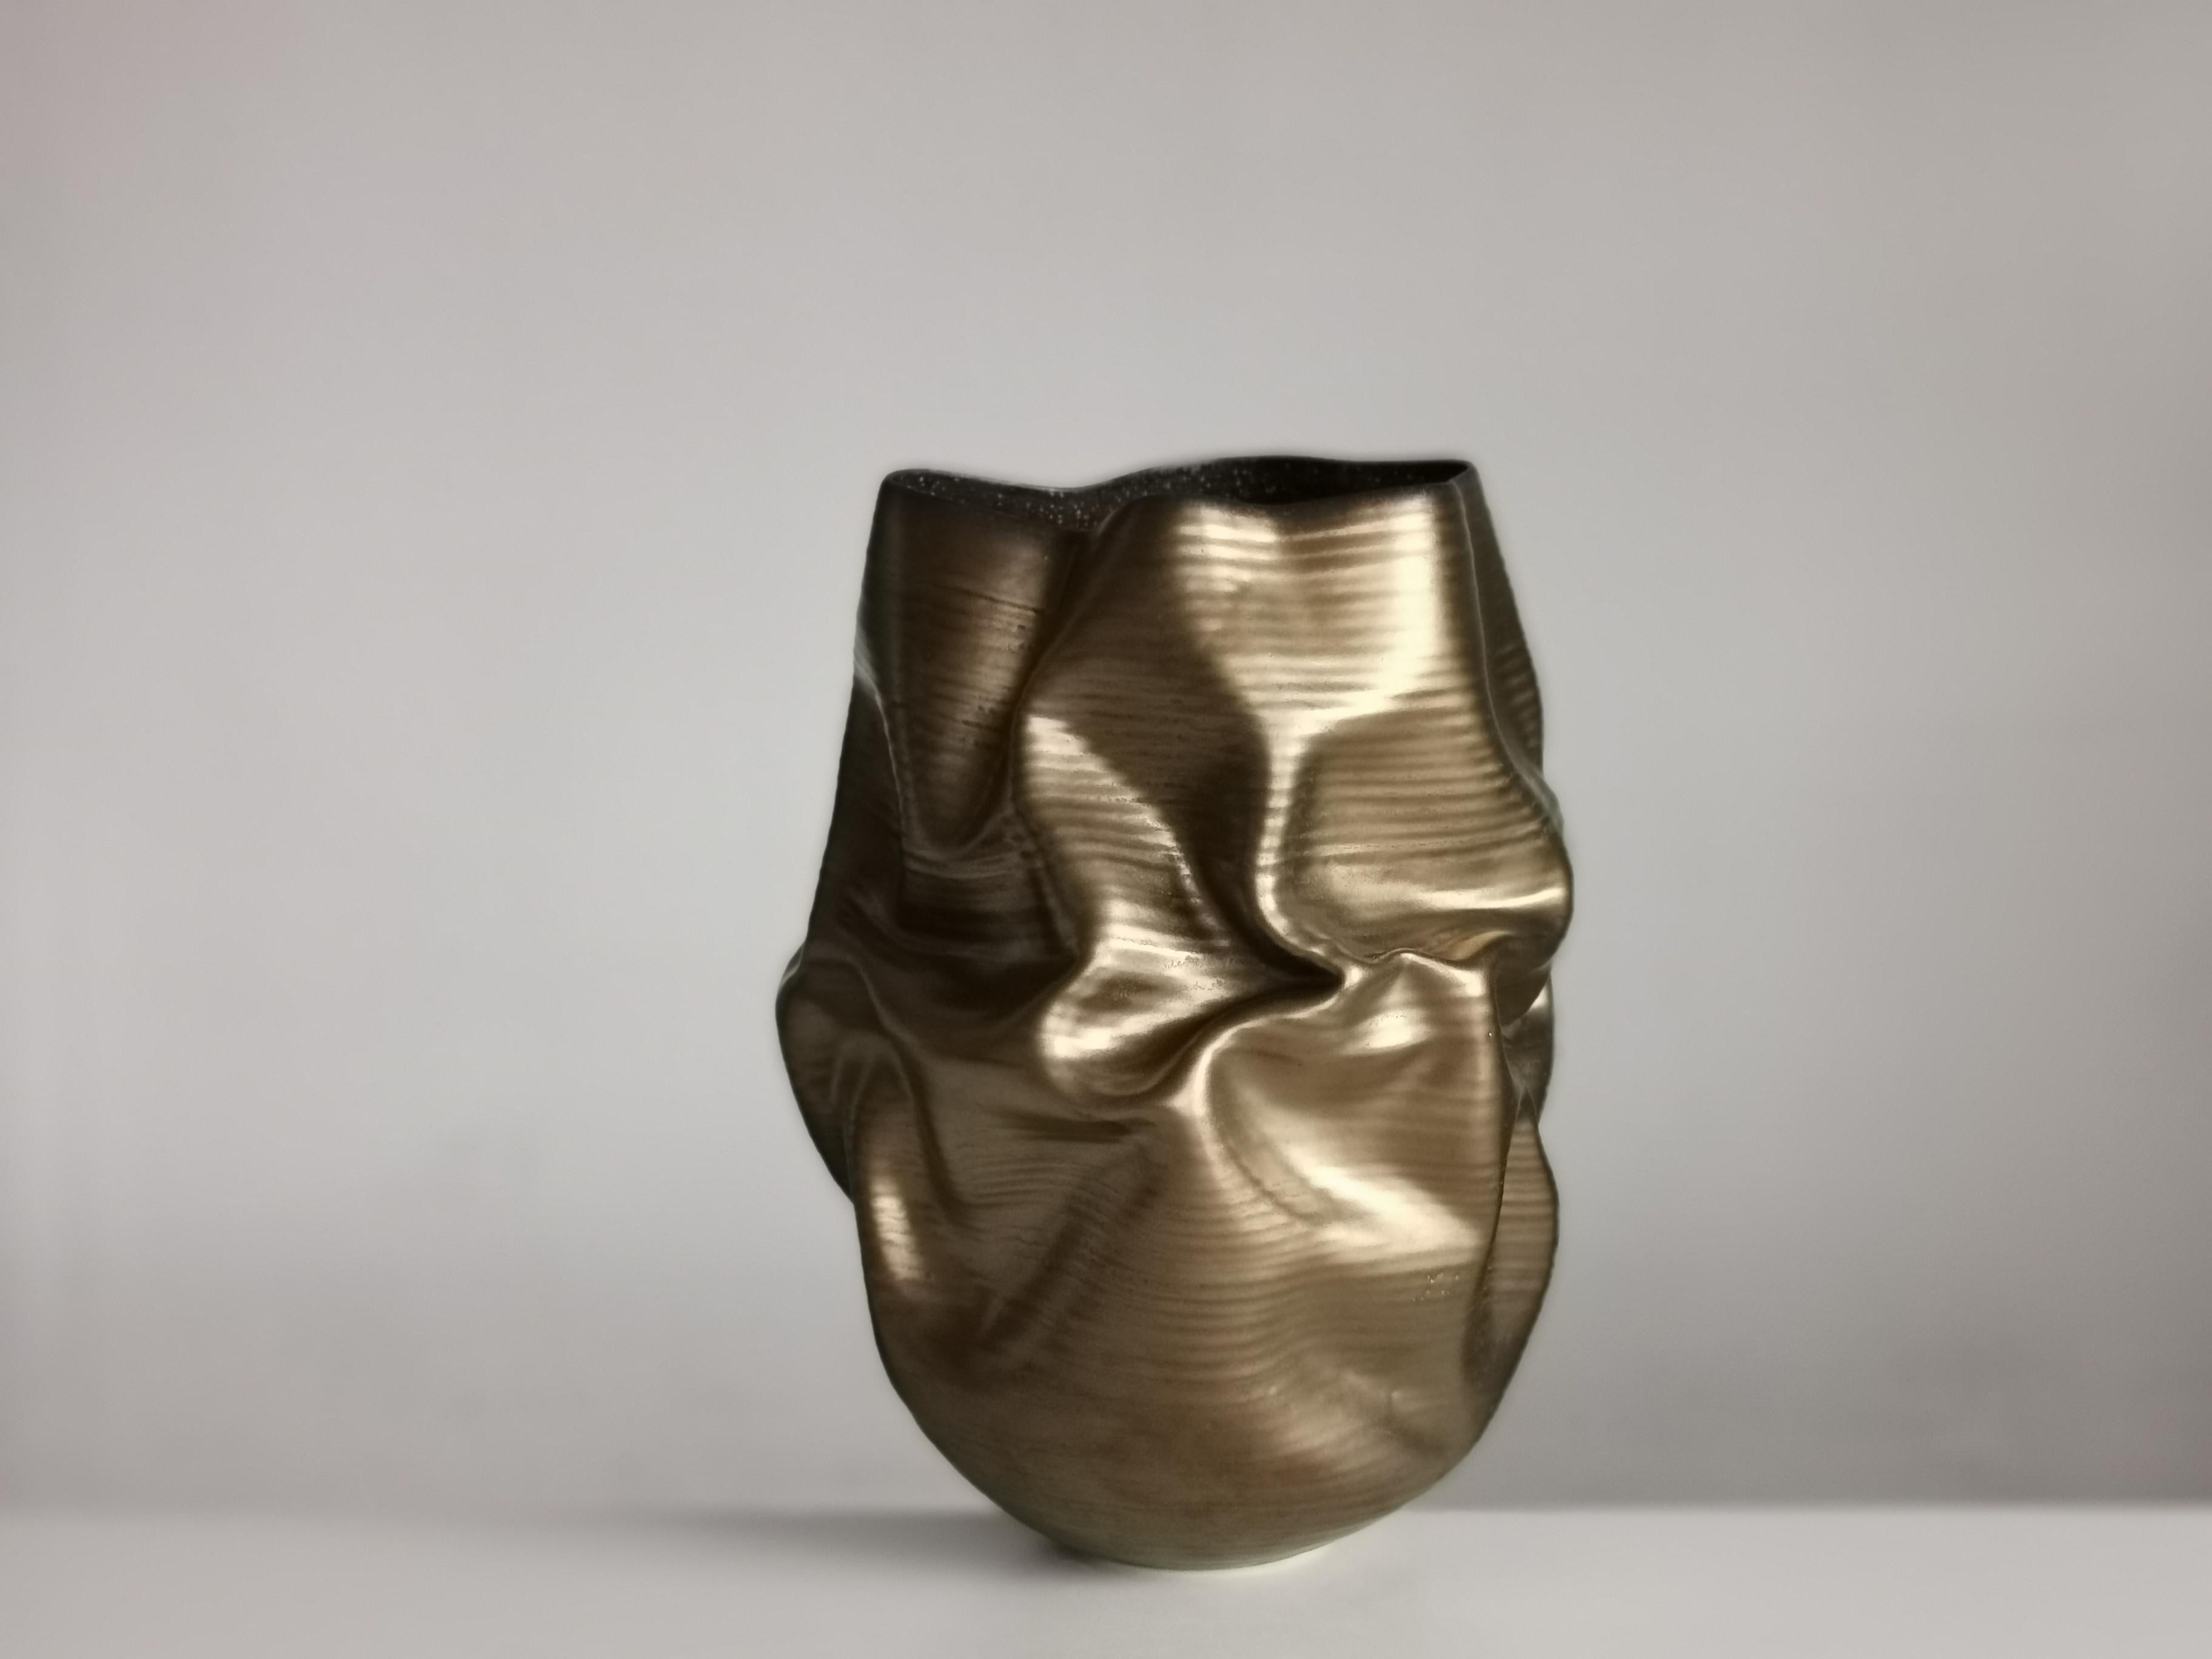 Contemporary Gold Crumpled Form, Unique Ceramic Sculpture Vessel N.76